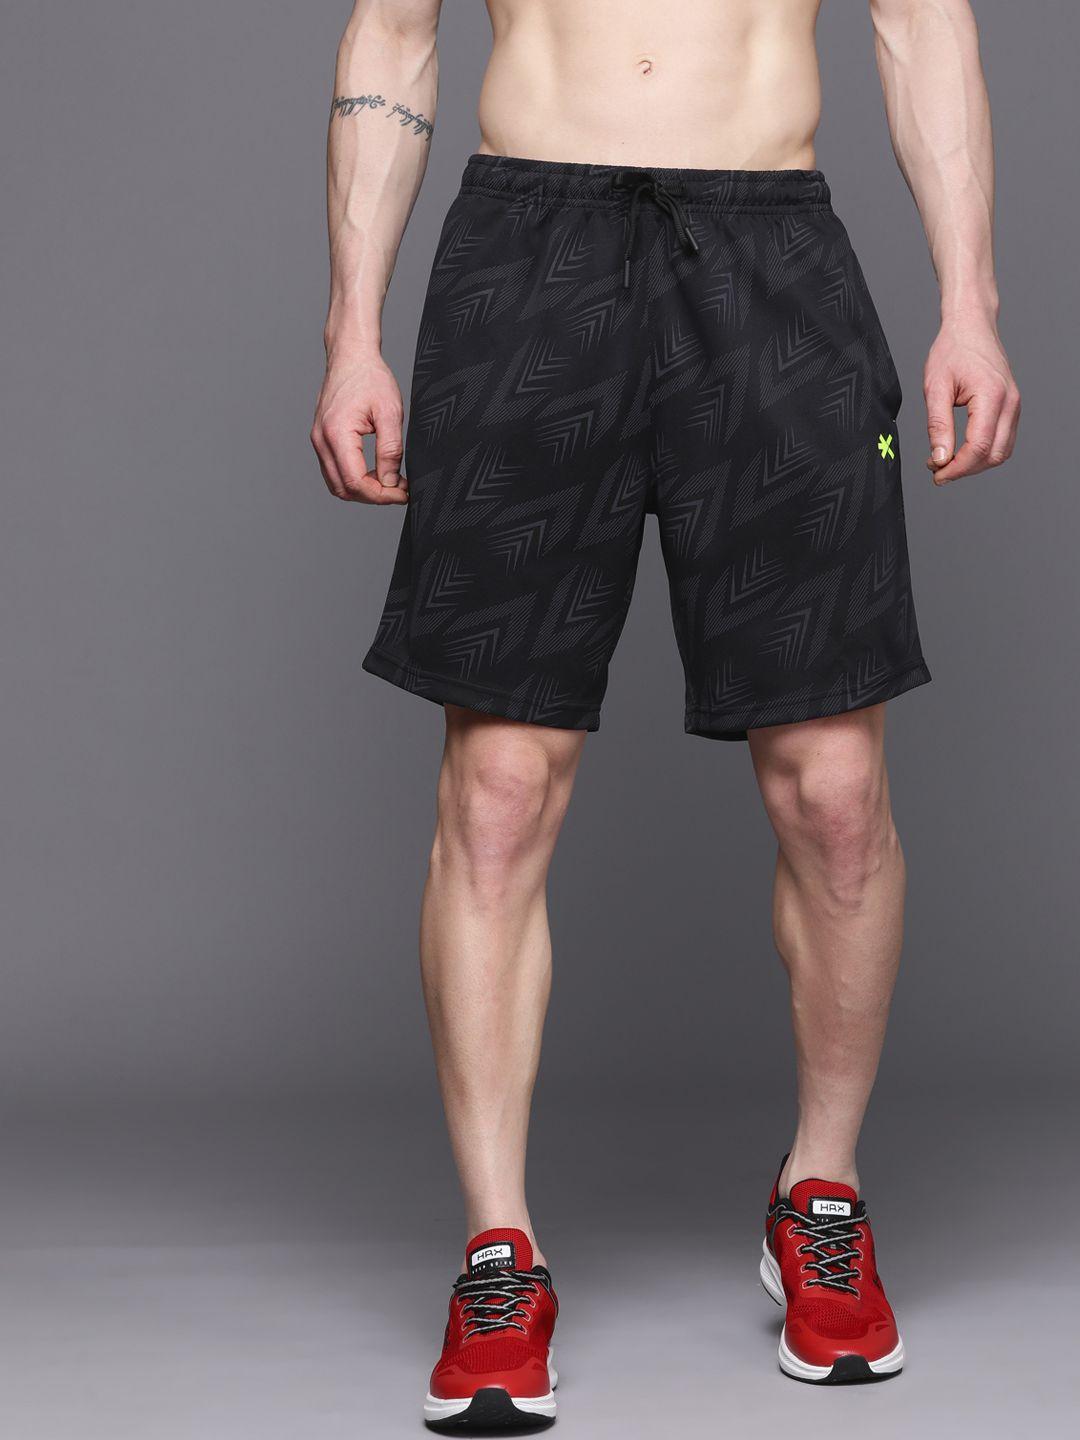 hrx by hrithik roshan men geometric printed running sports shorts